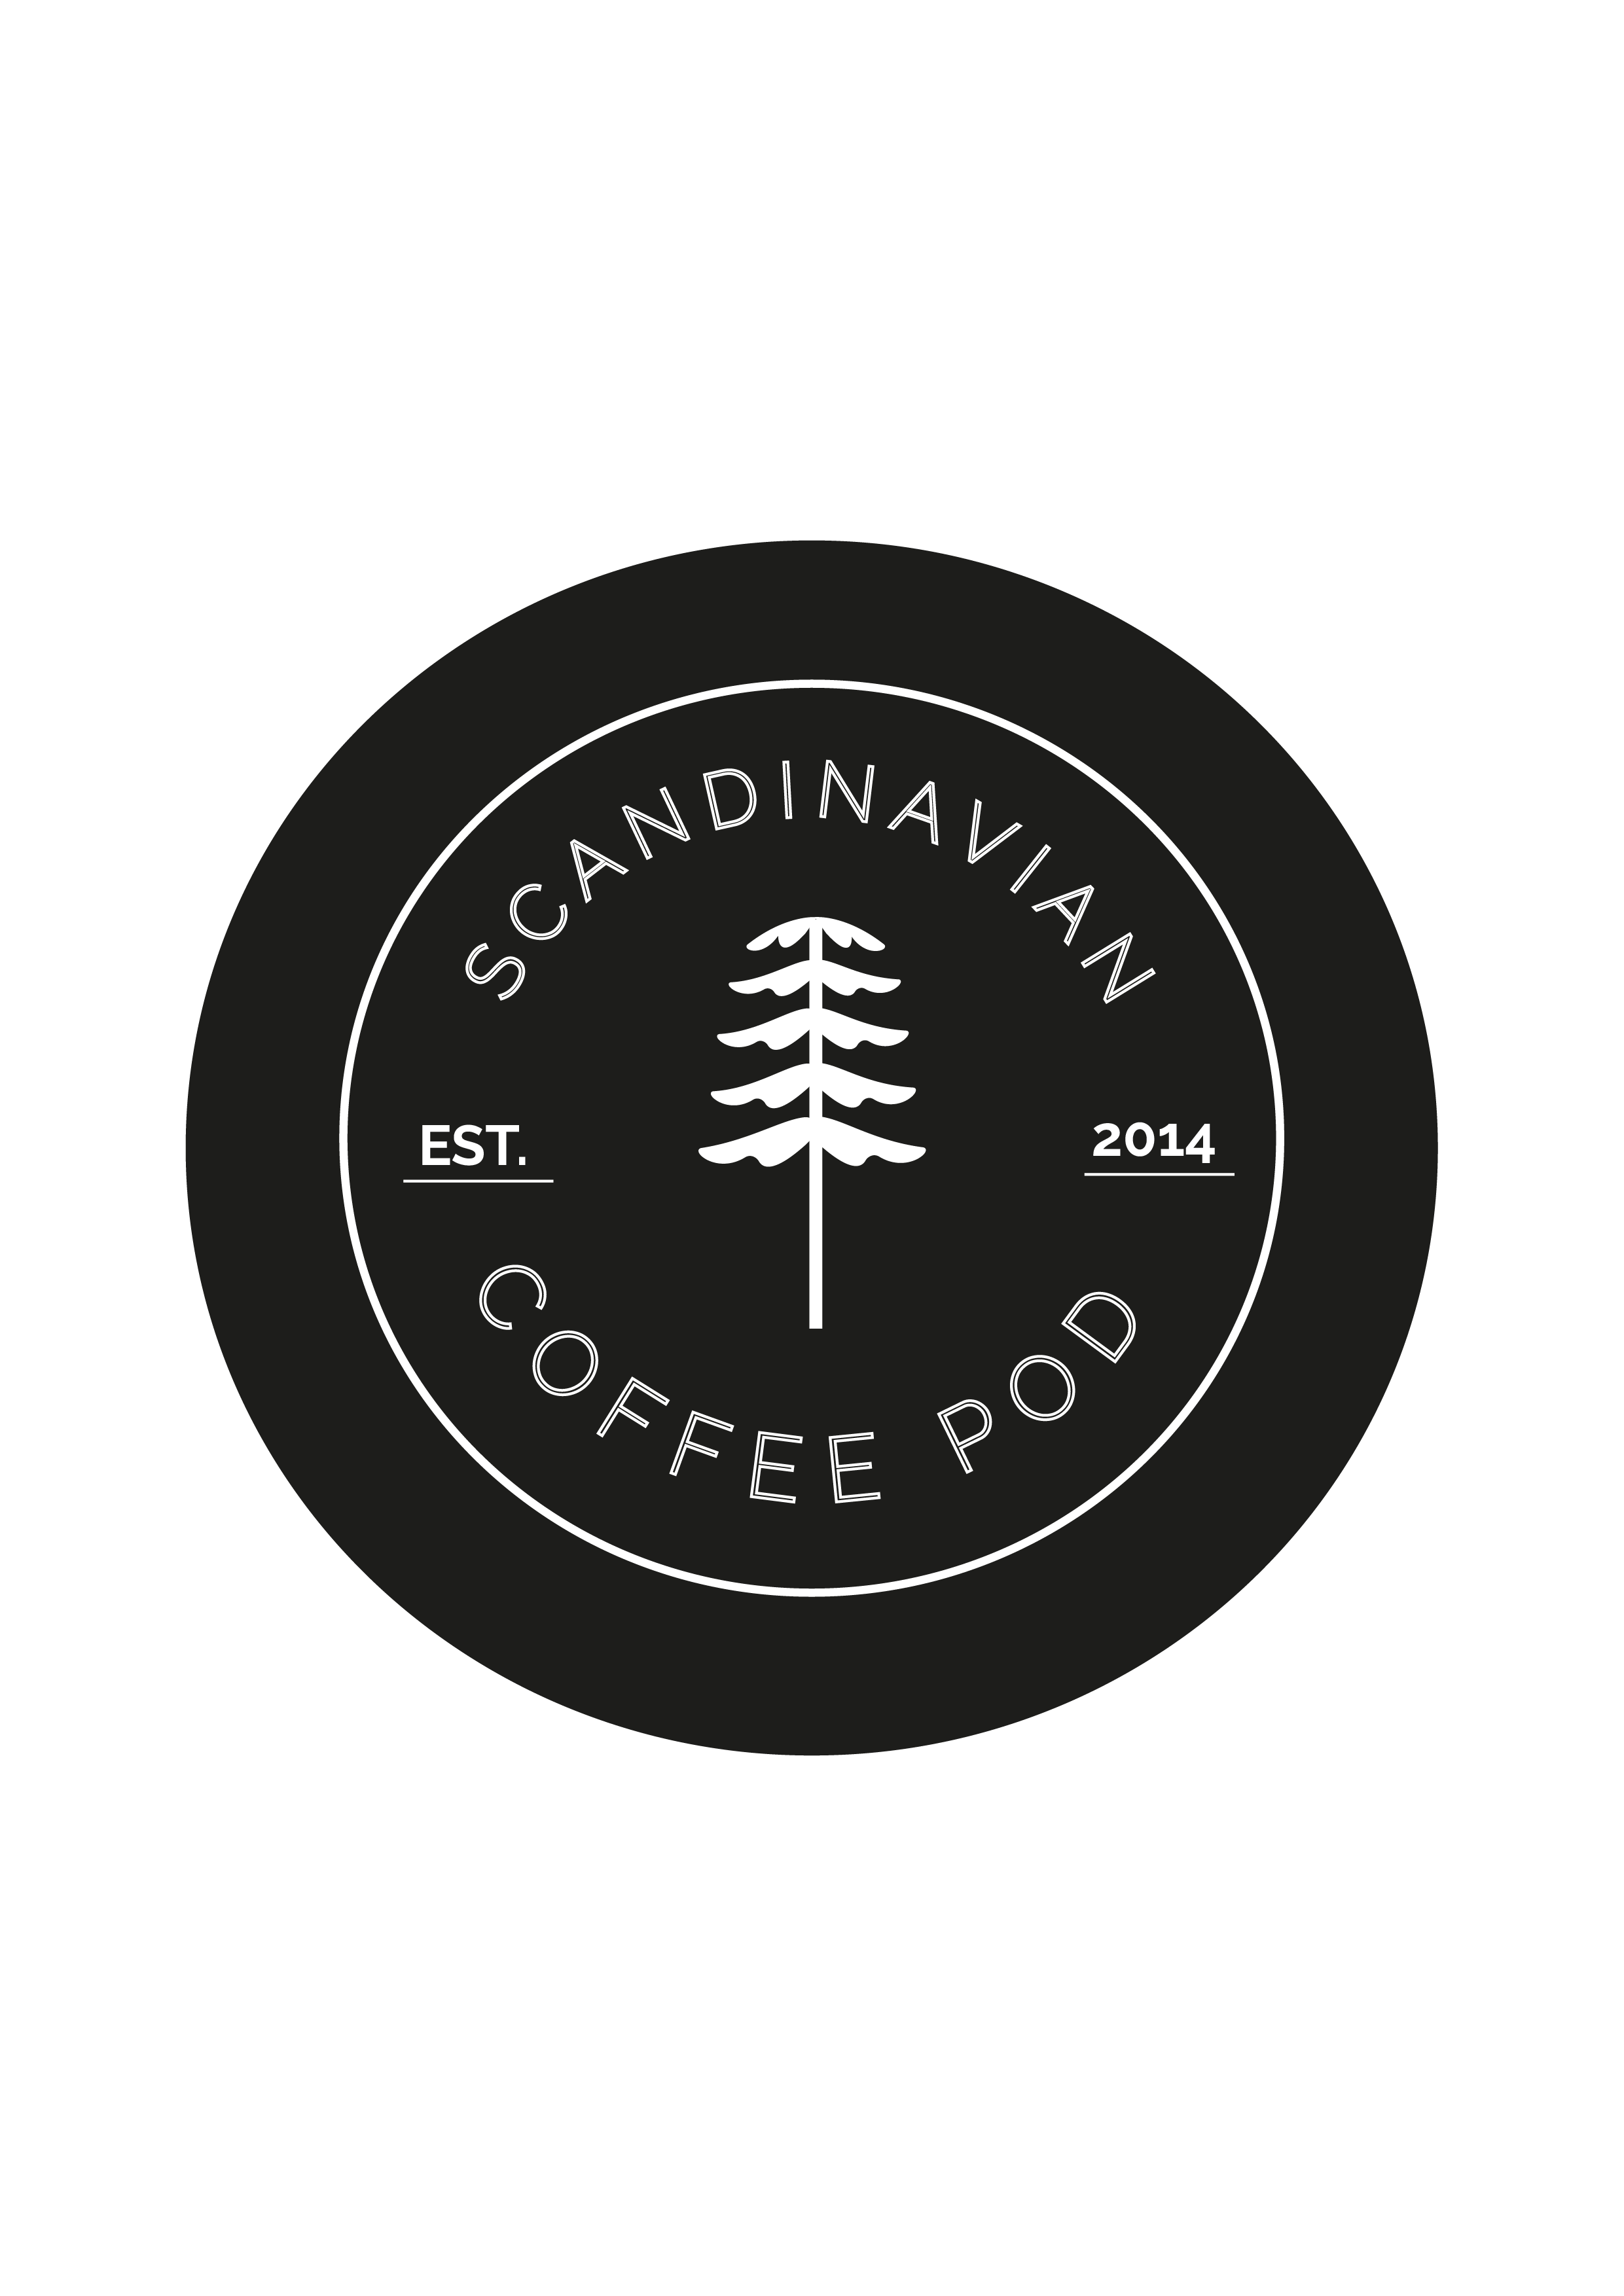 Scandinavian Coffee Pod Established 2014